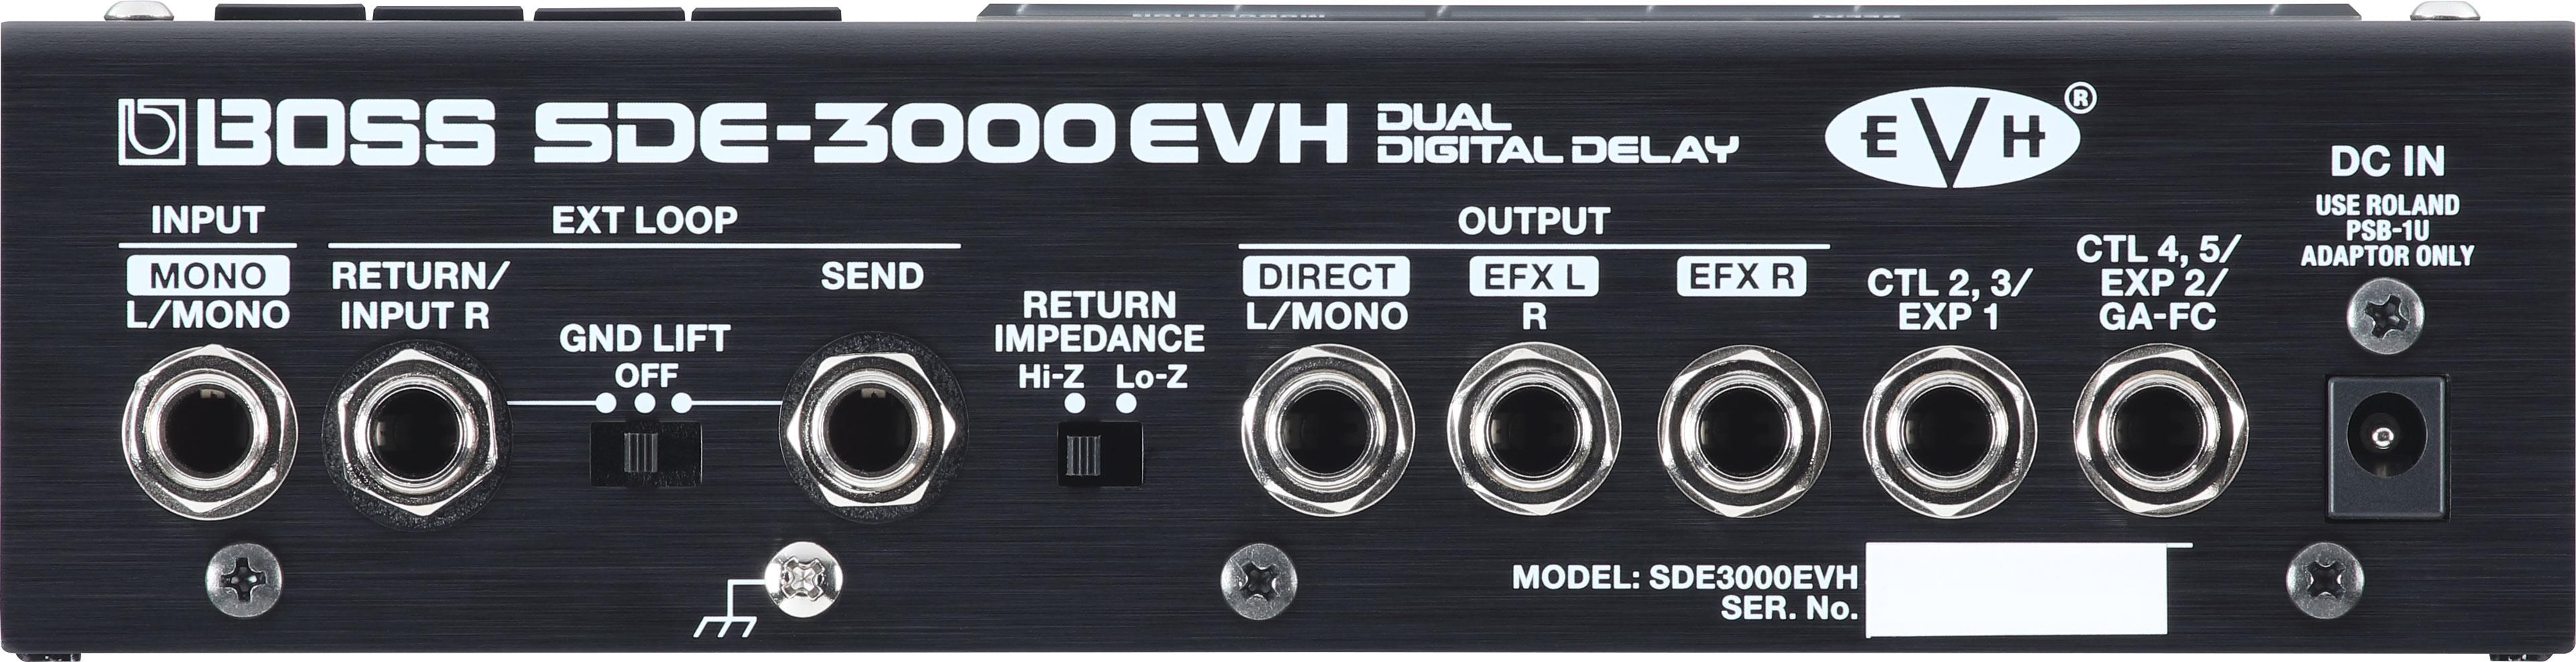 SDE-3000EVH Dual Digital Delay背面画像